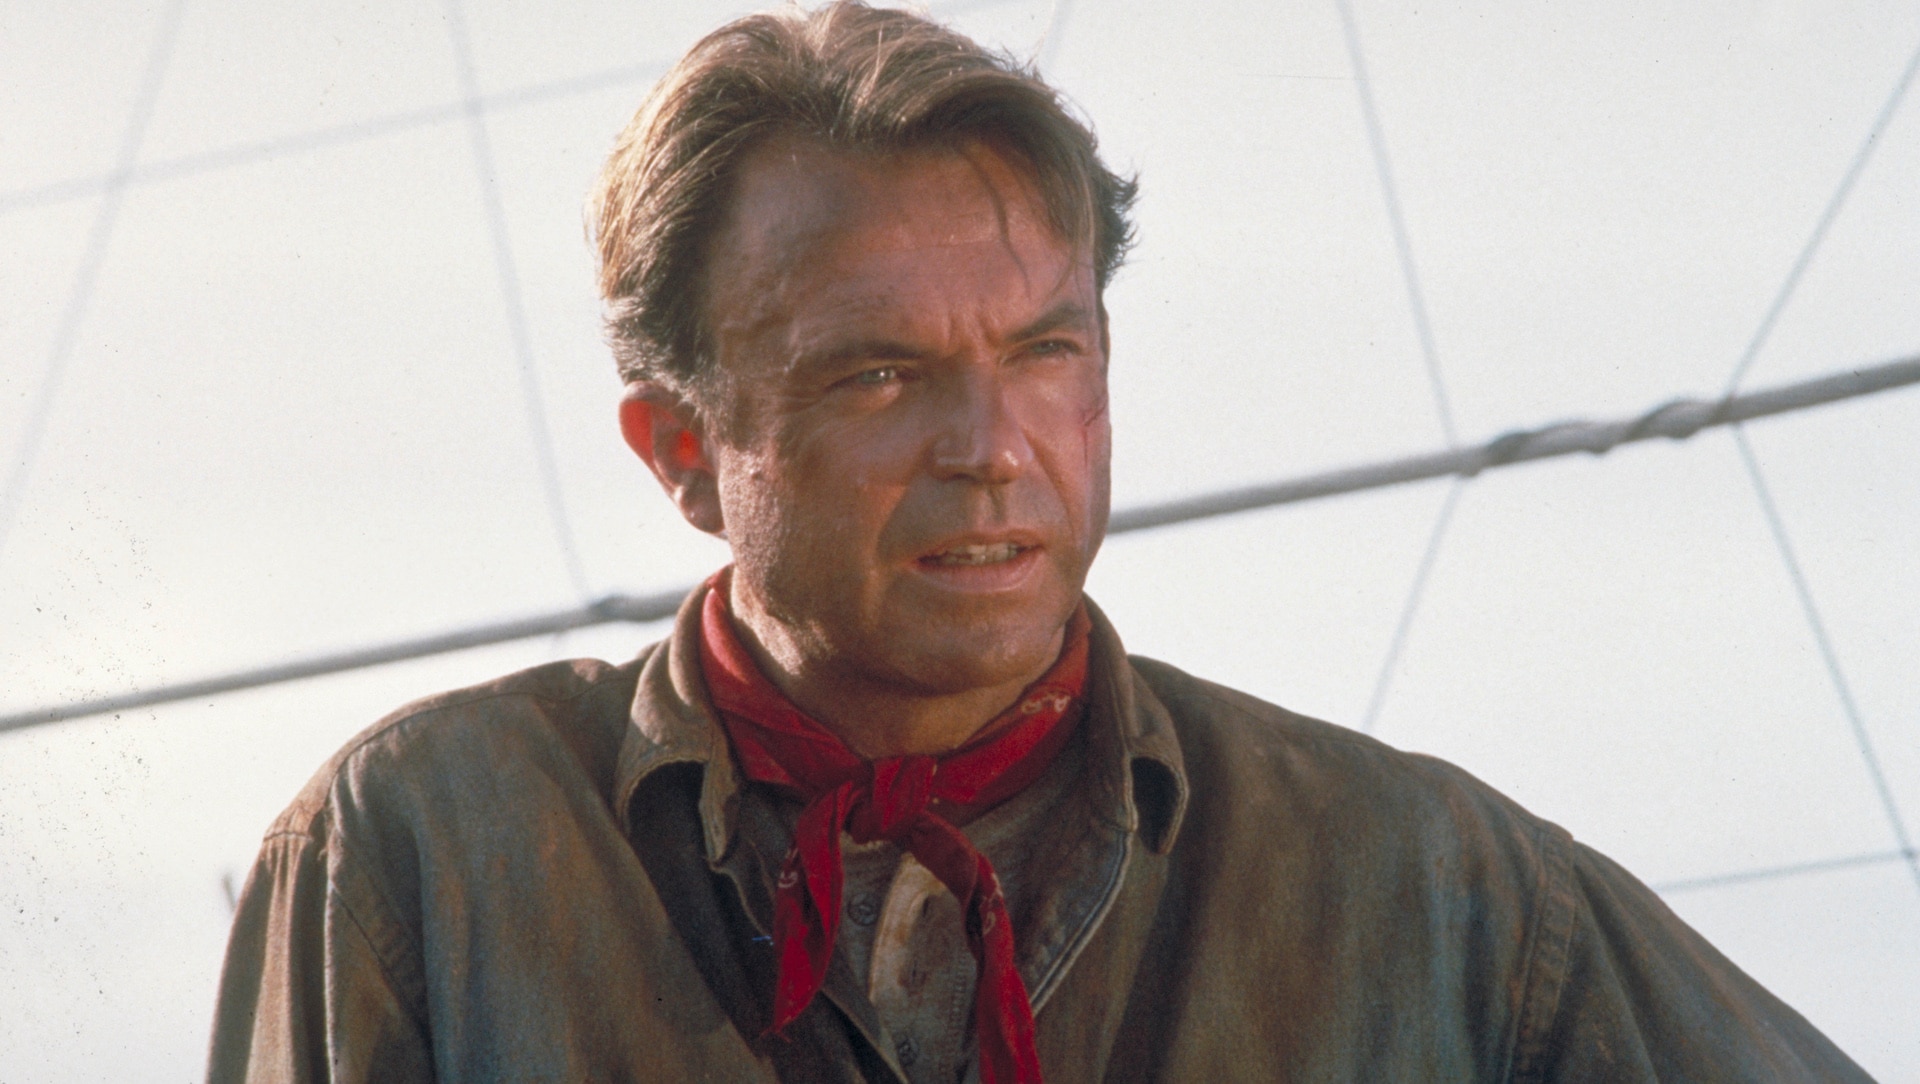 Sam Neill as Dr. Alan Grant in Jurassic Park (1993).